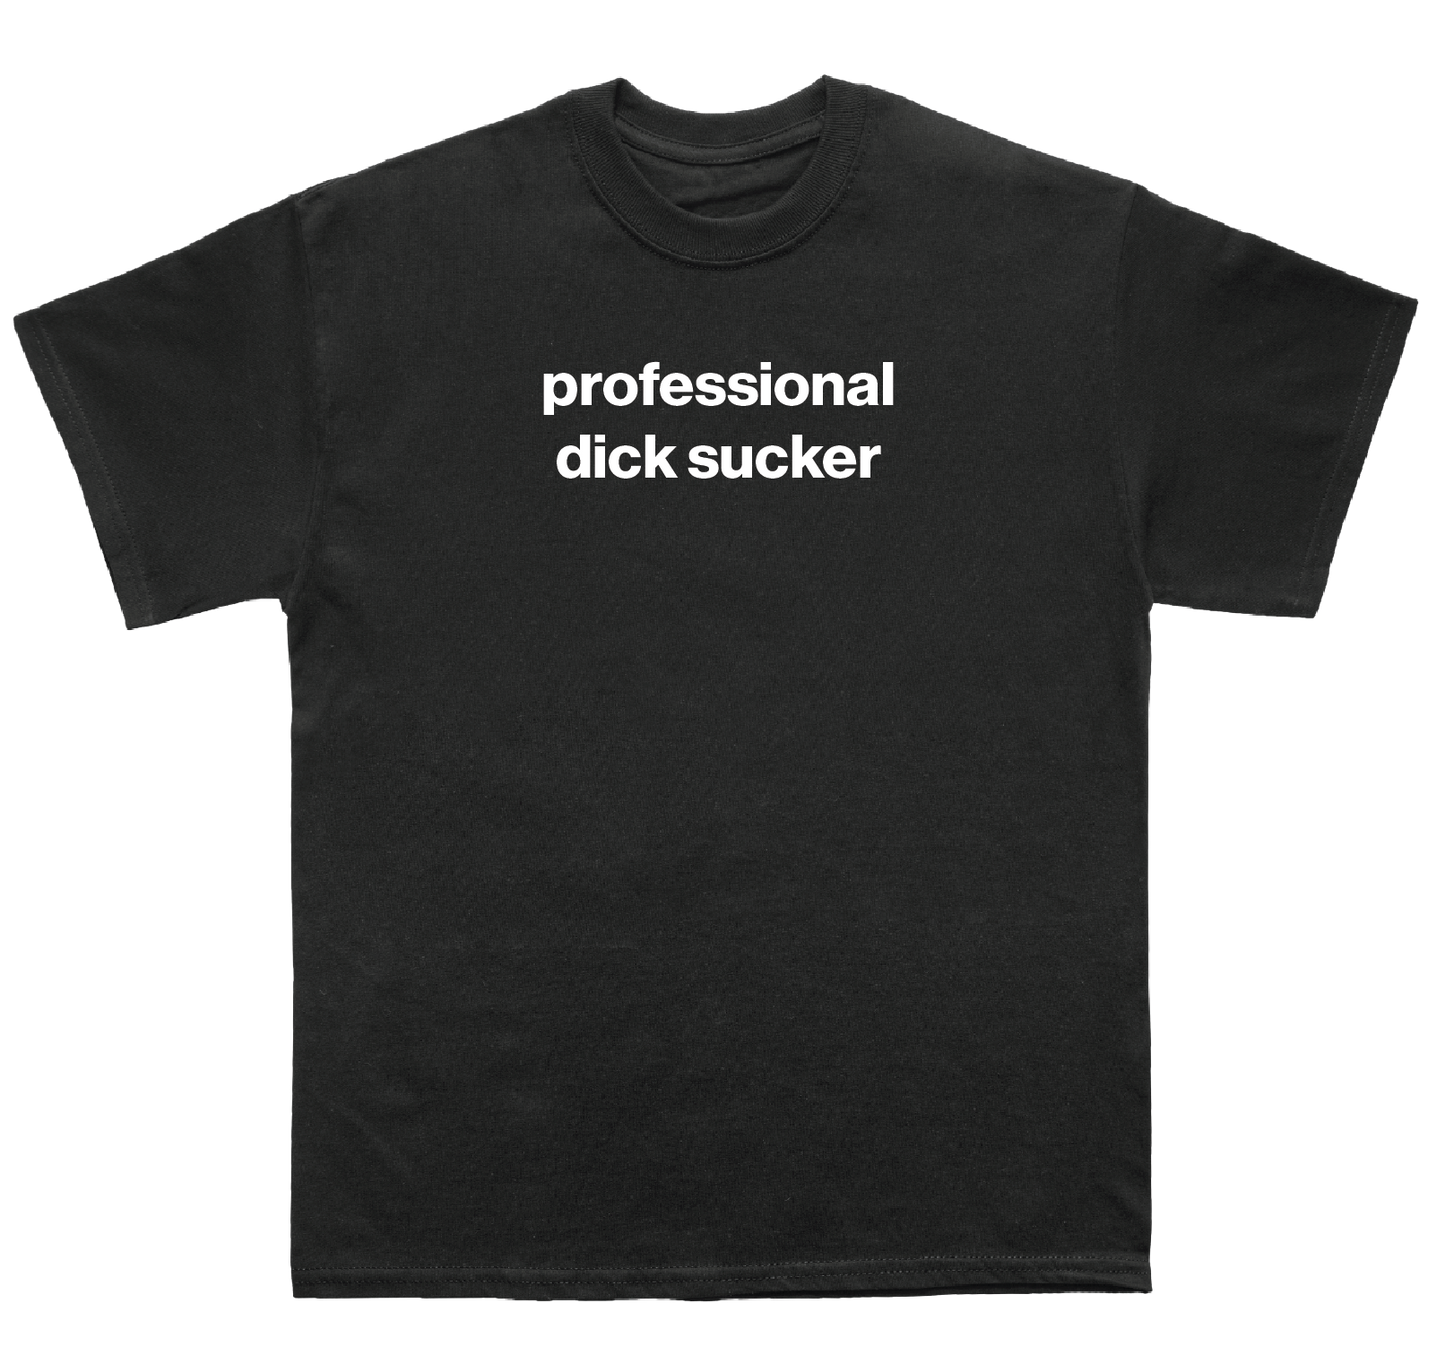 professional dick sucker shirt